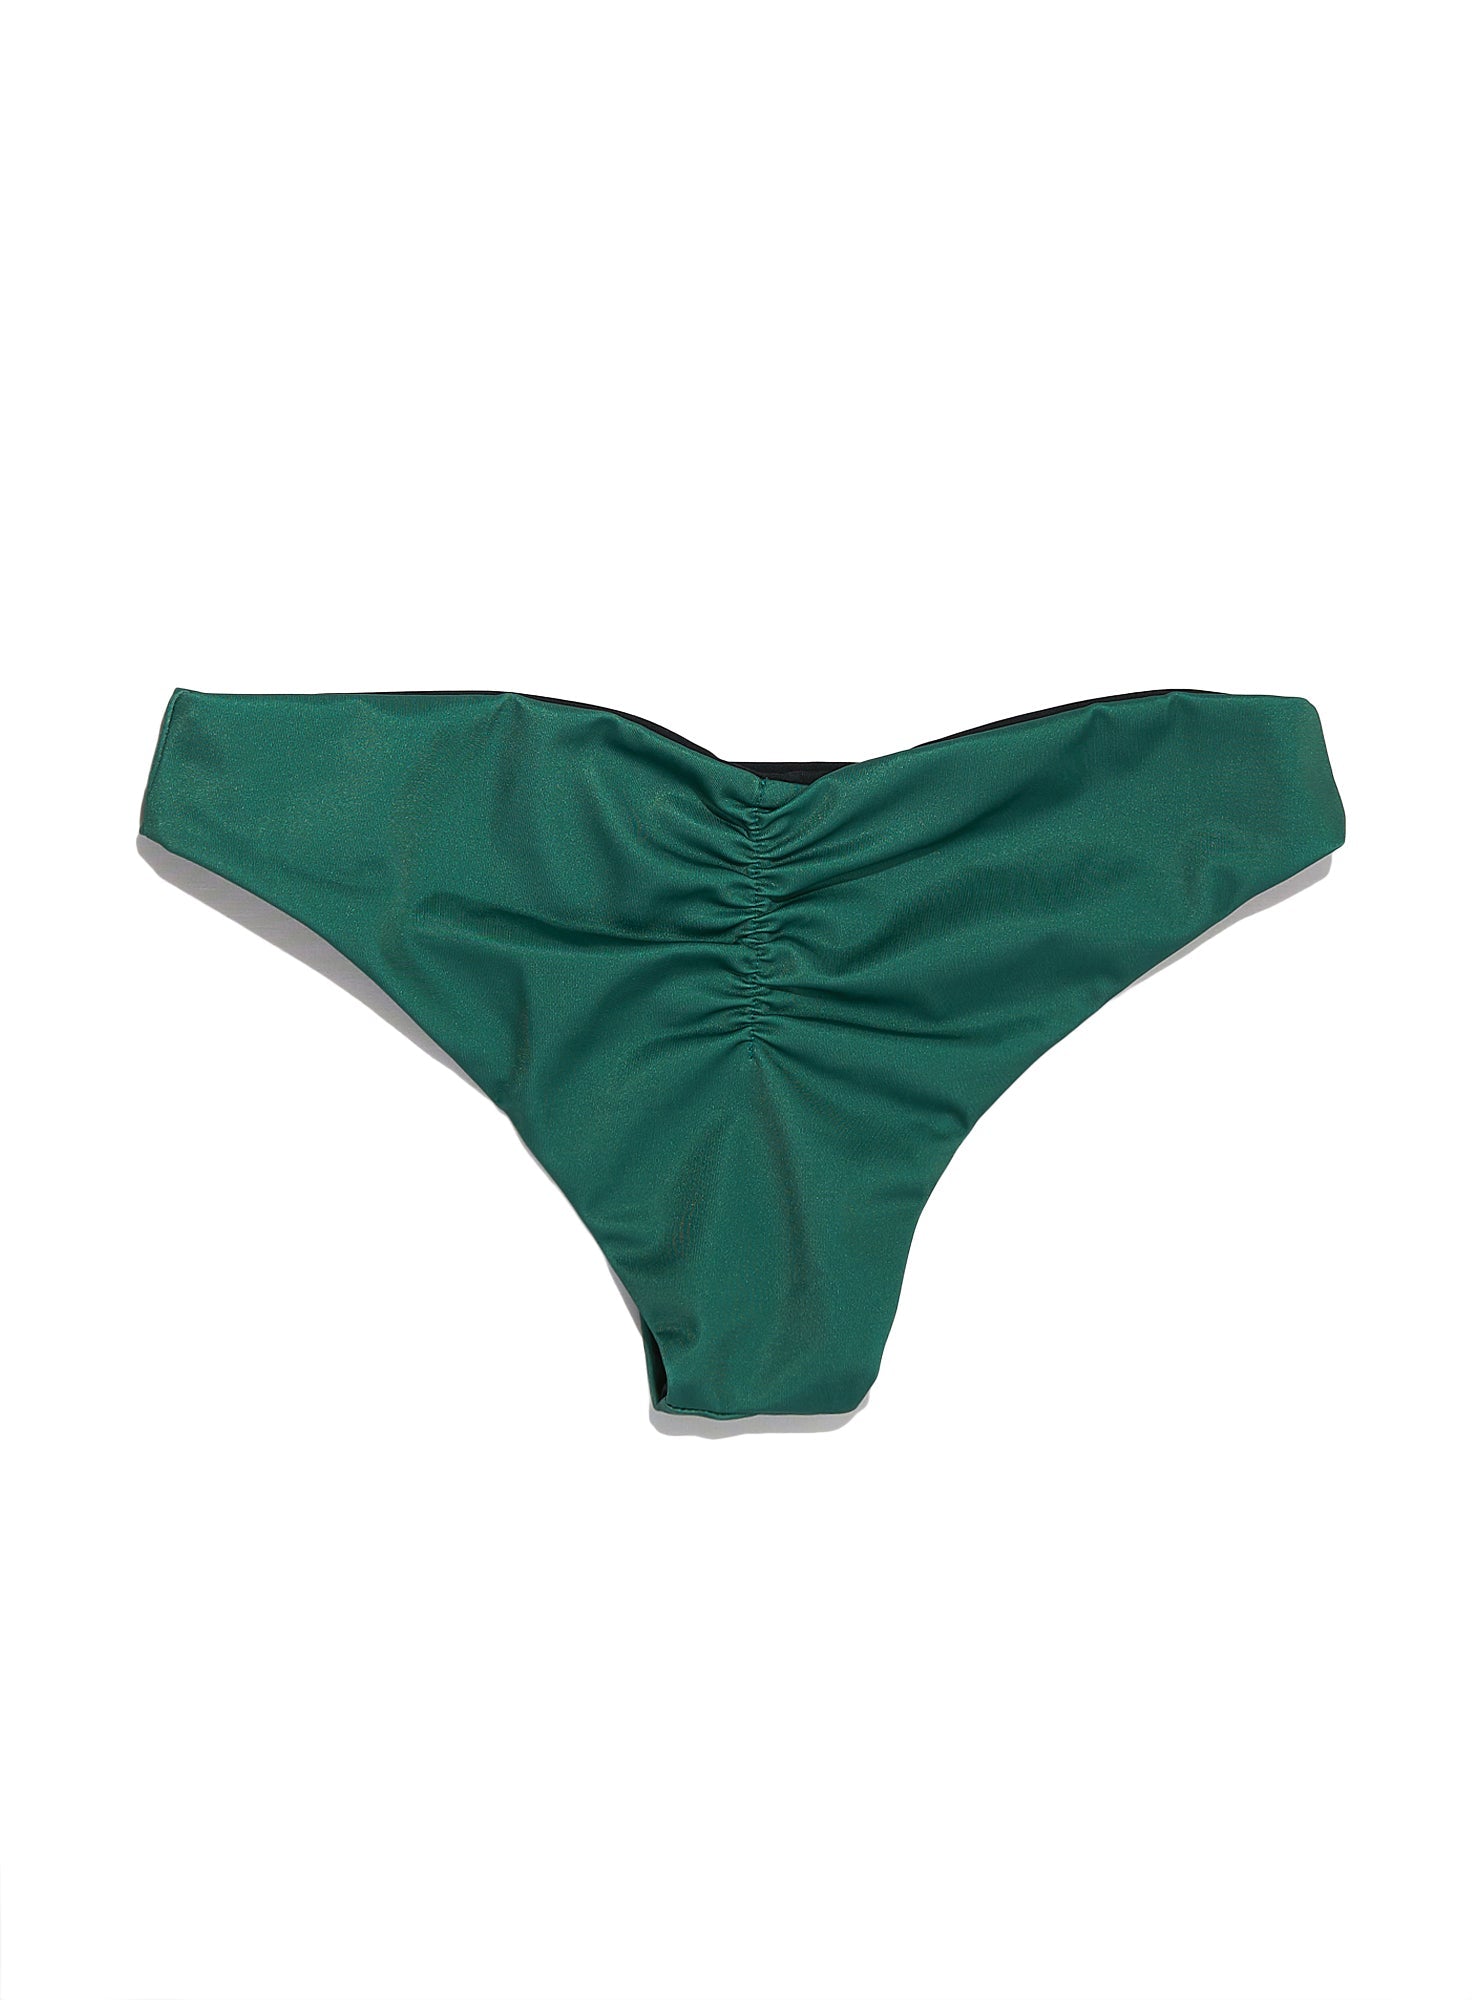 Eve Black/Green Reversible Cheeky Bikini Bottom-Yindi & Salt-stride